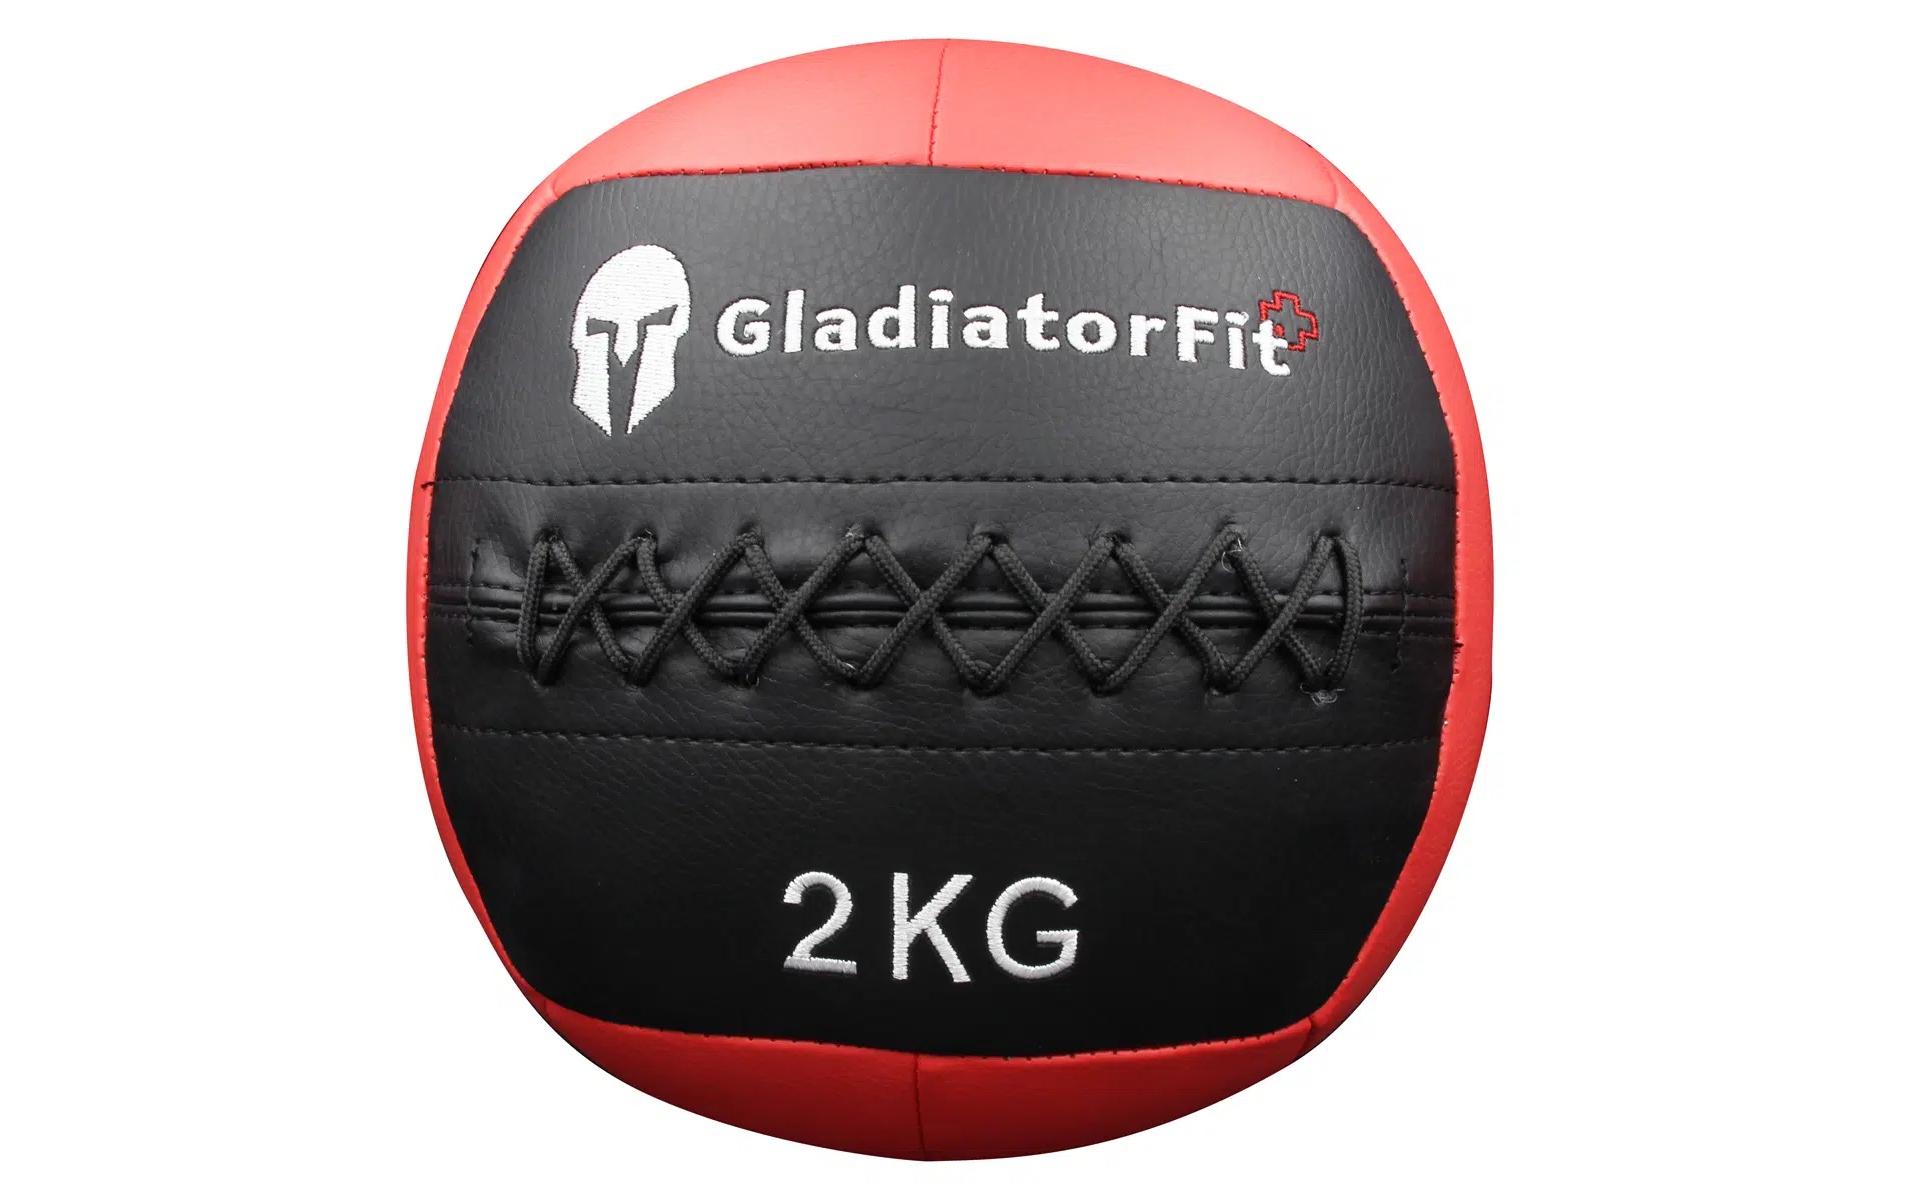 Gladiatorfit Medizinball Ultra-strapazierfähiger Wall Ball 2 kg